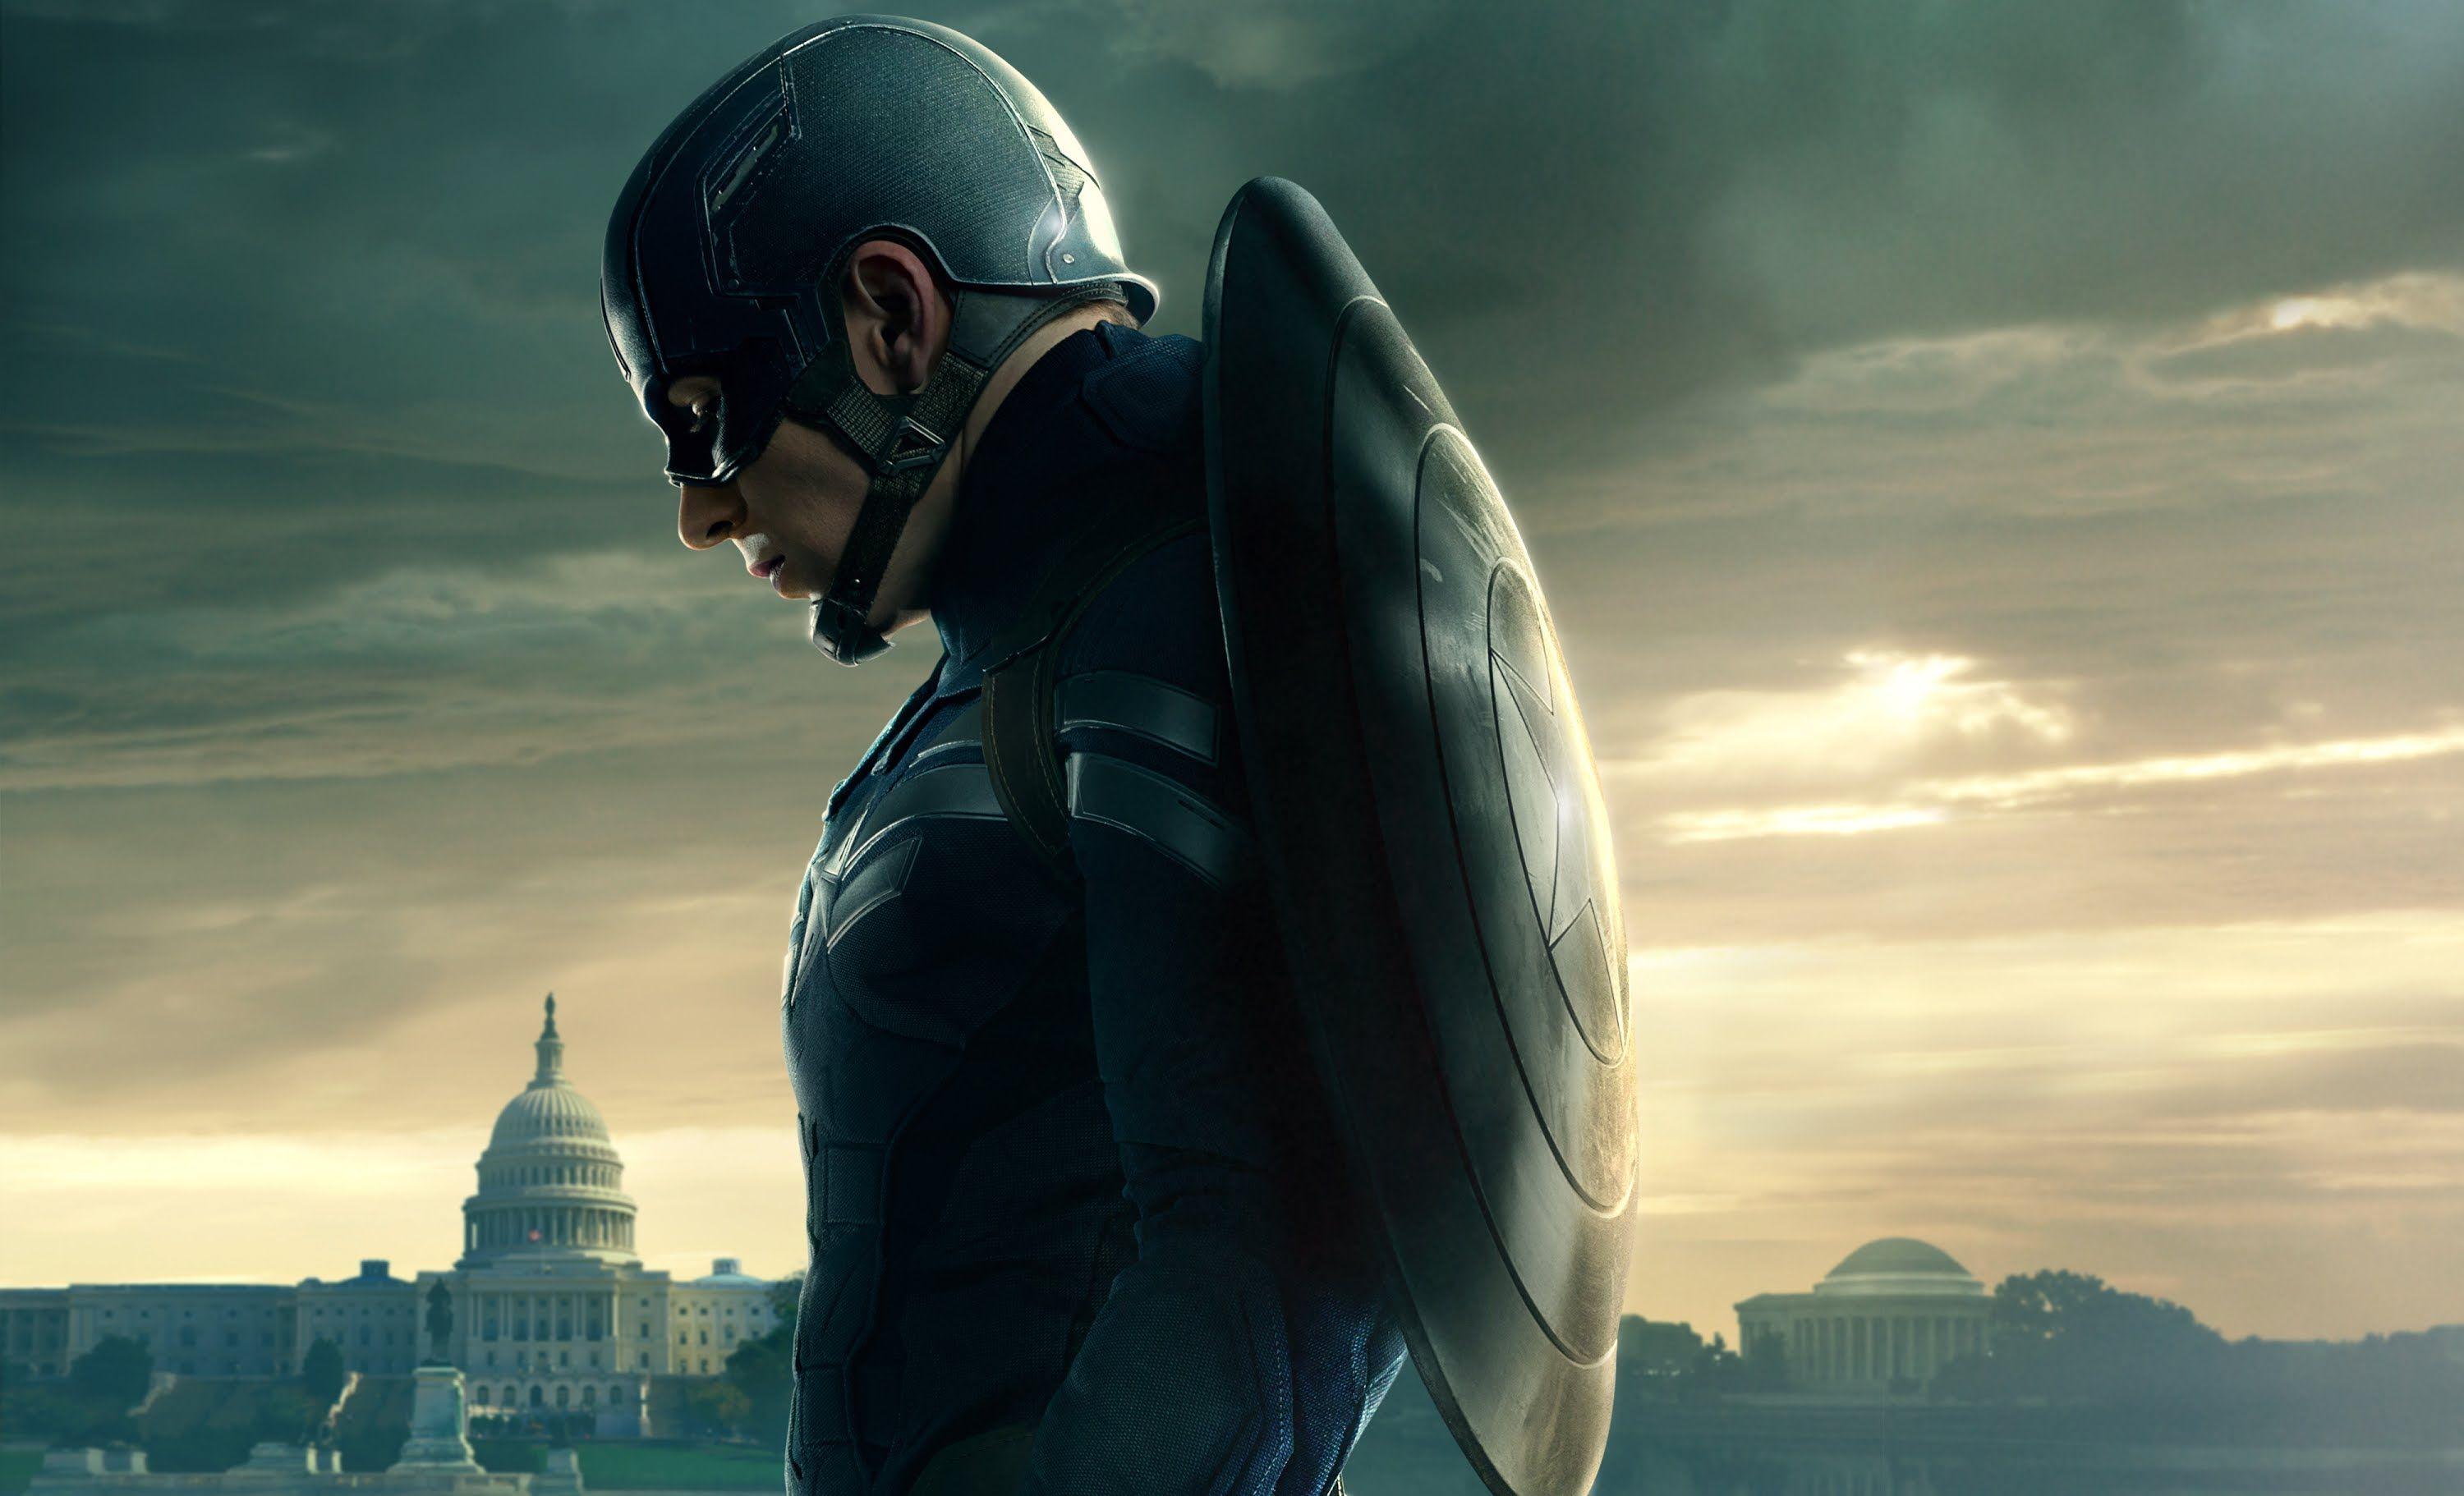 Captain America HD wallpaper free download